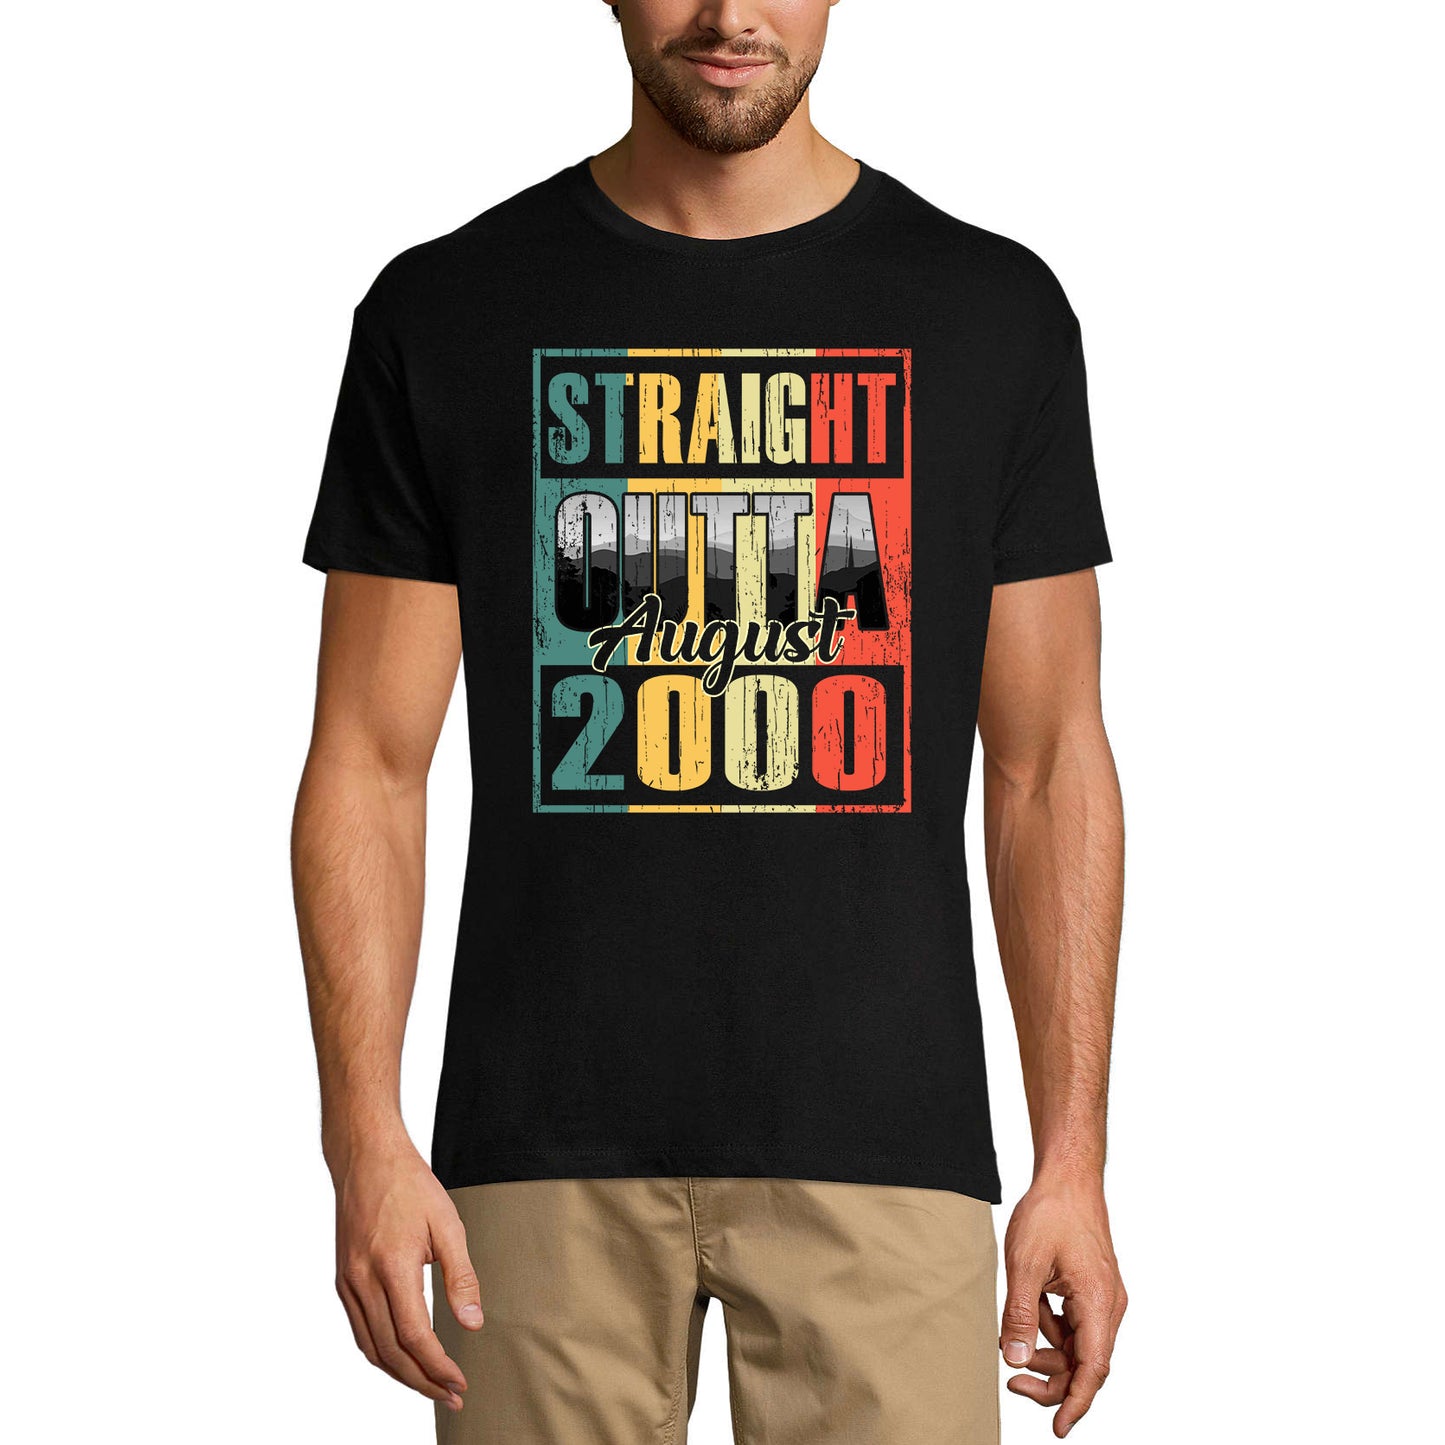 ULTRABASIC Men's T-Shirt Straight Outta August 2000 - Vintage 21st Birthday Gift Tee Shirt